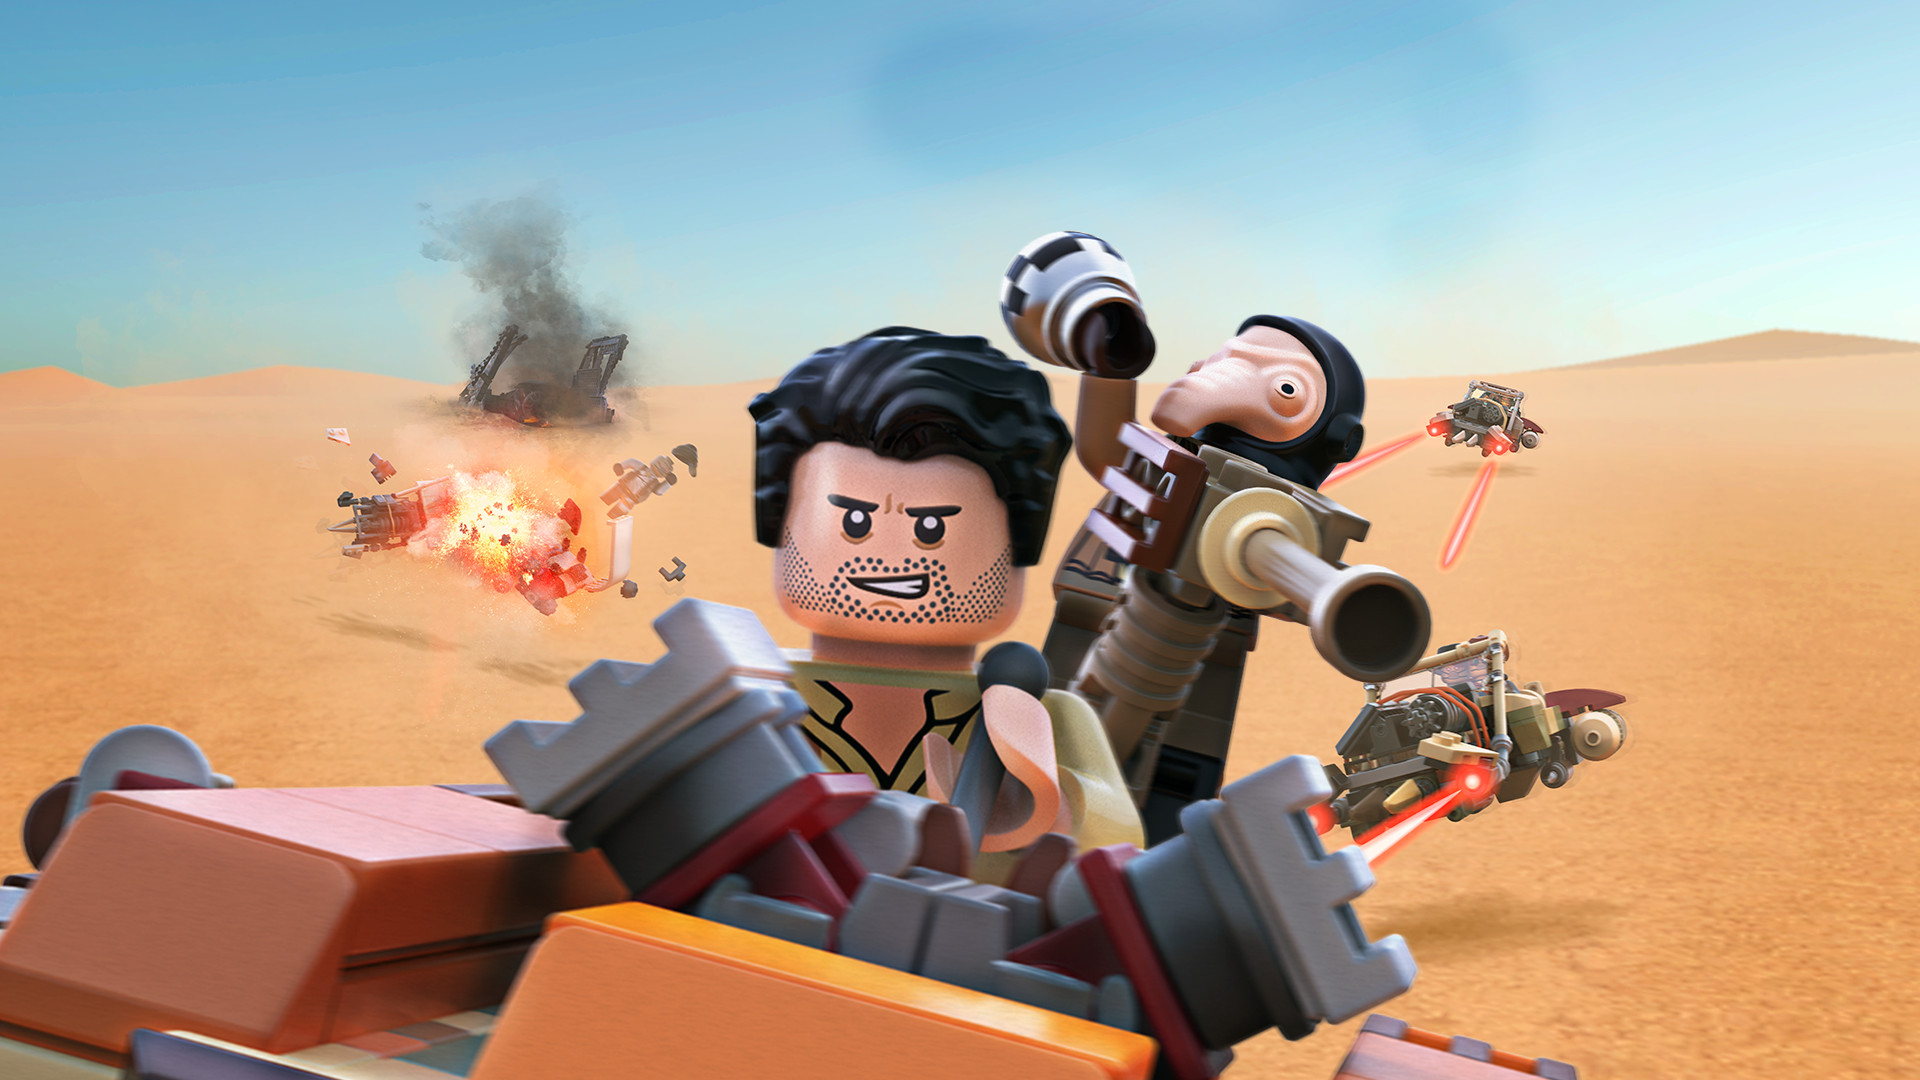 LEGO Star Wars: The Force Awakens - Jakku: Poe's Quest for Survival DLC Steam CD Key $2.25